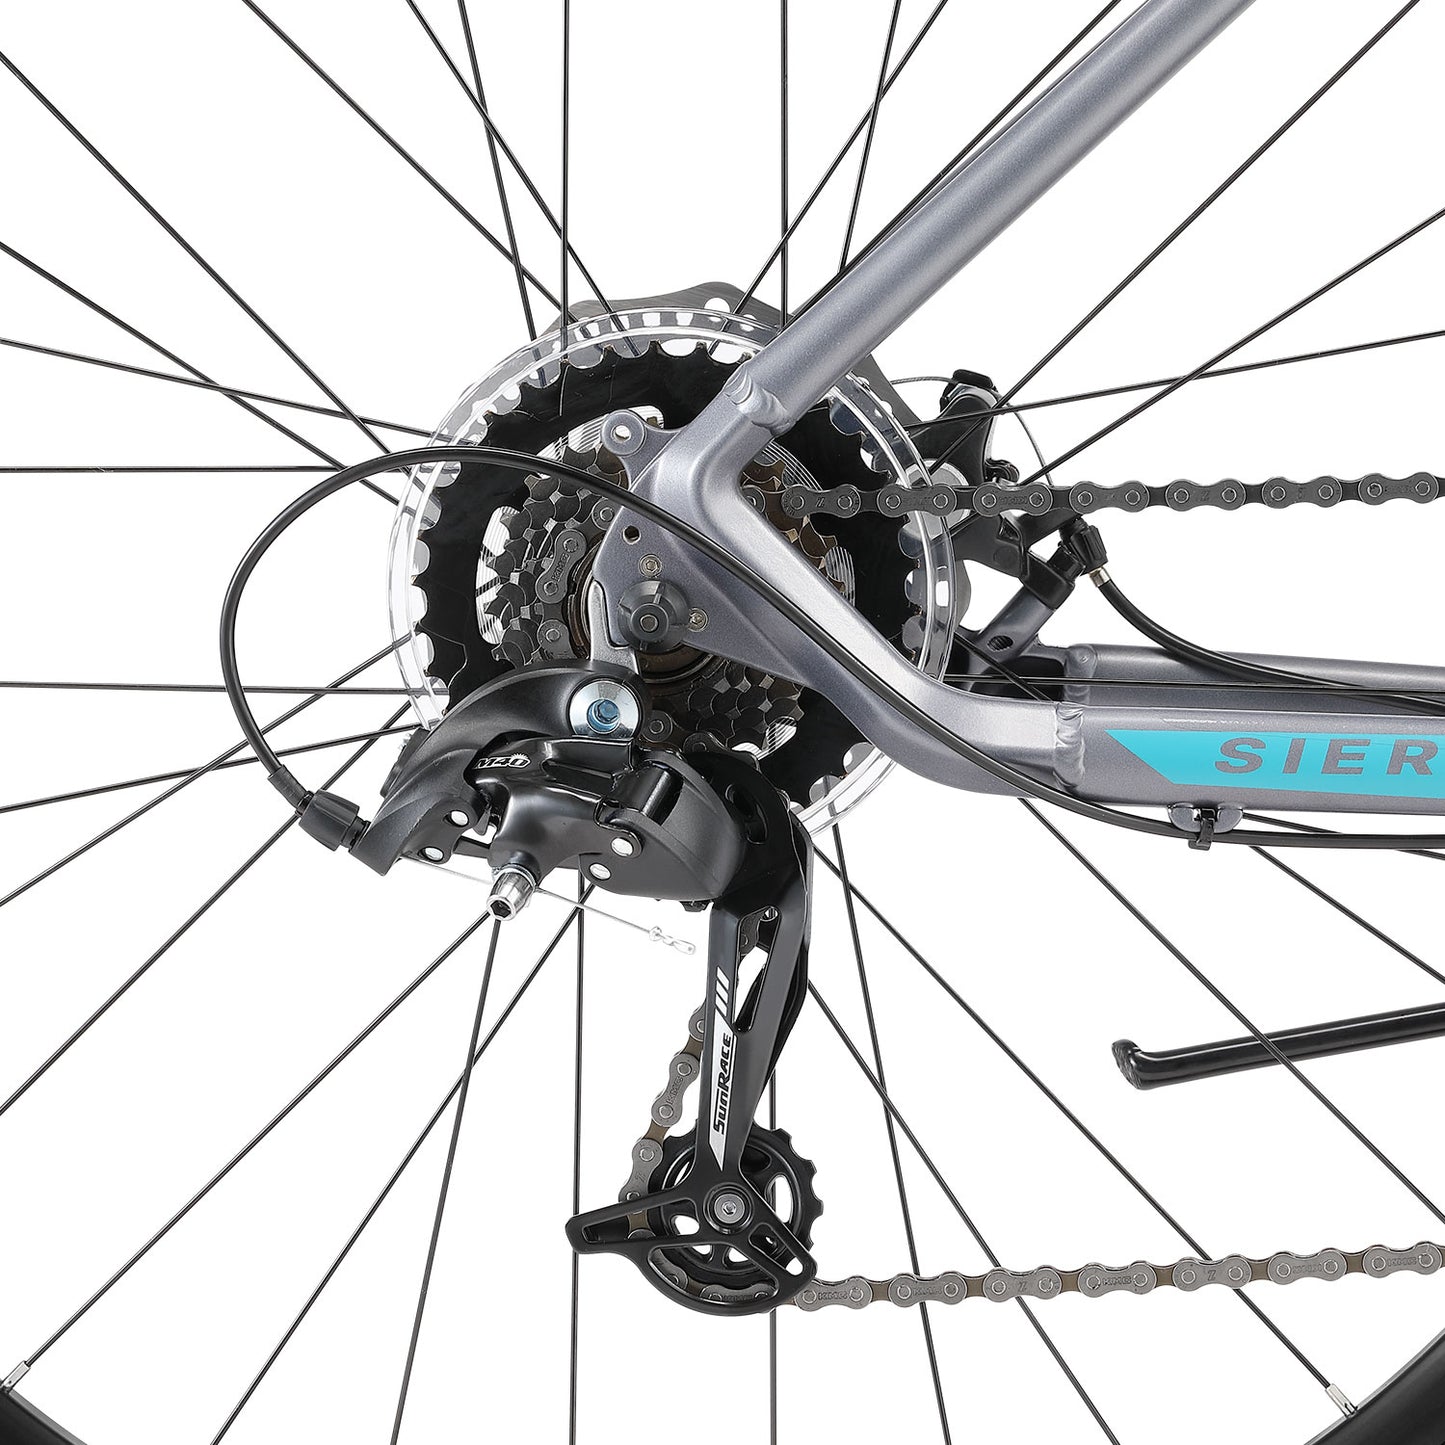 Progear Bikes Sierra Adventure/Hybrid Bike 700c*17" in Graphite